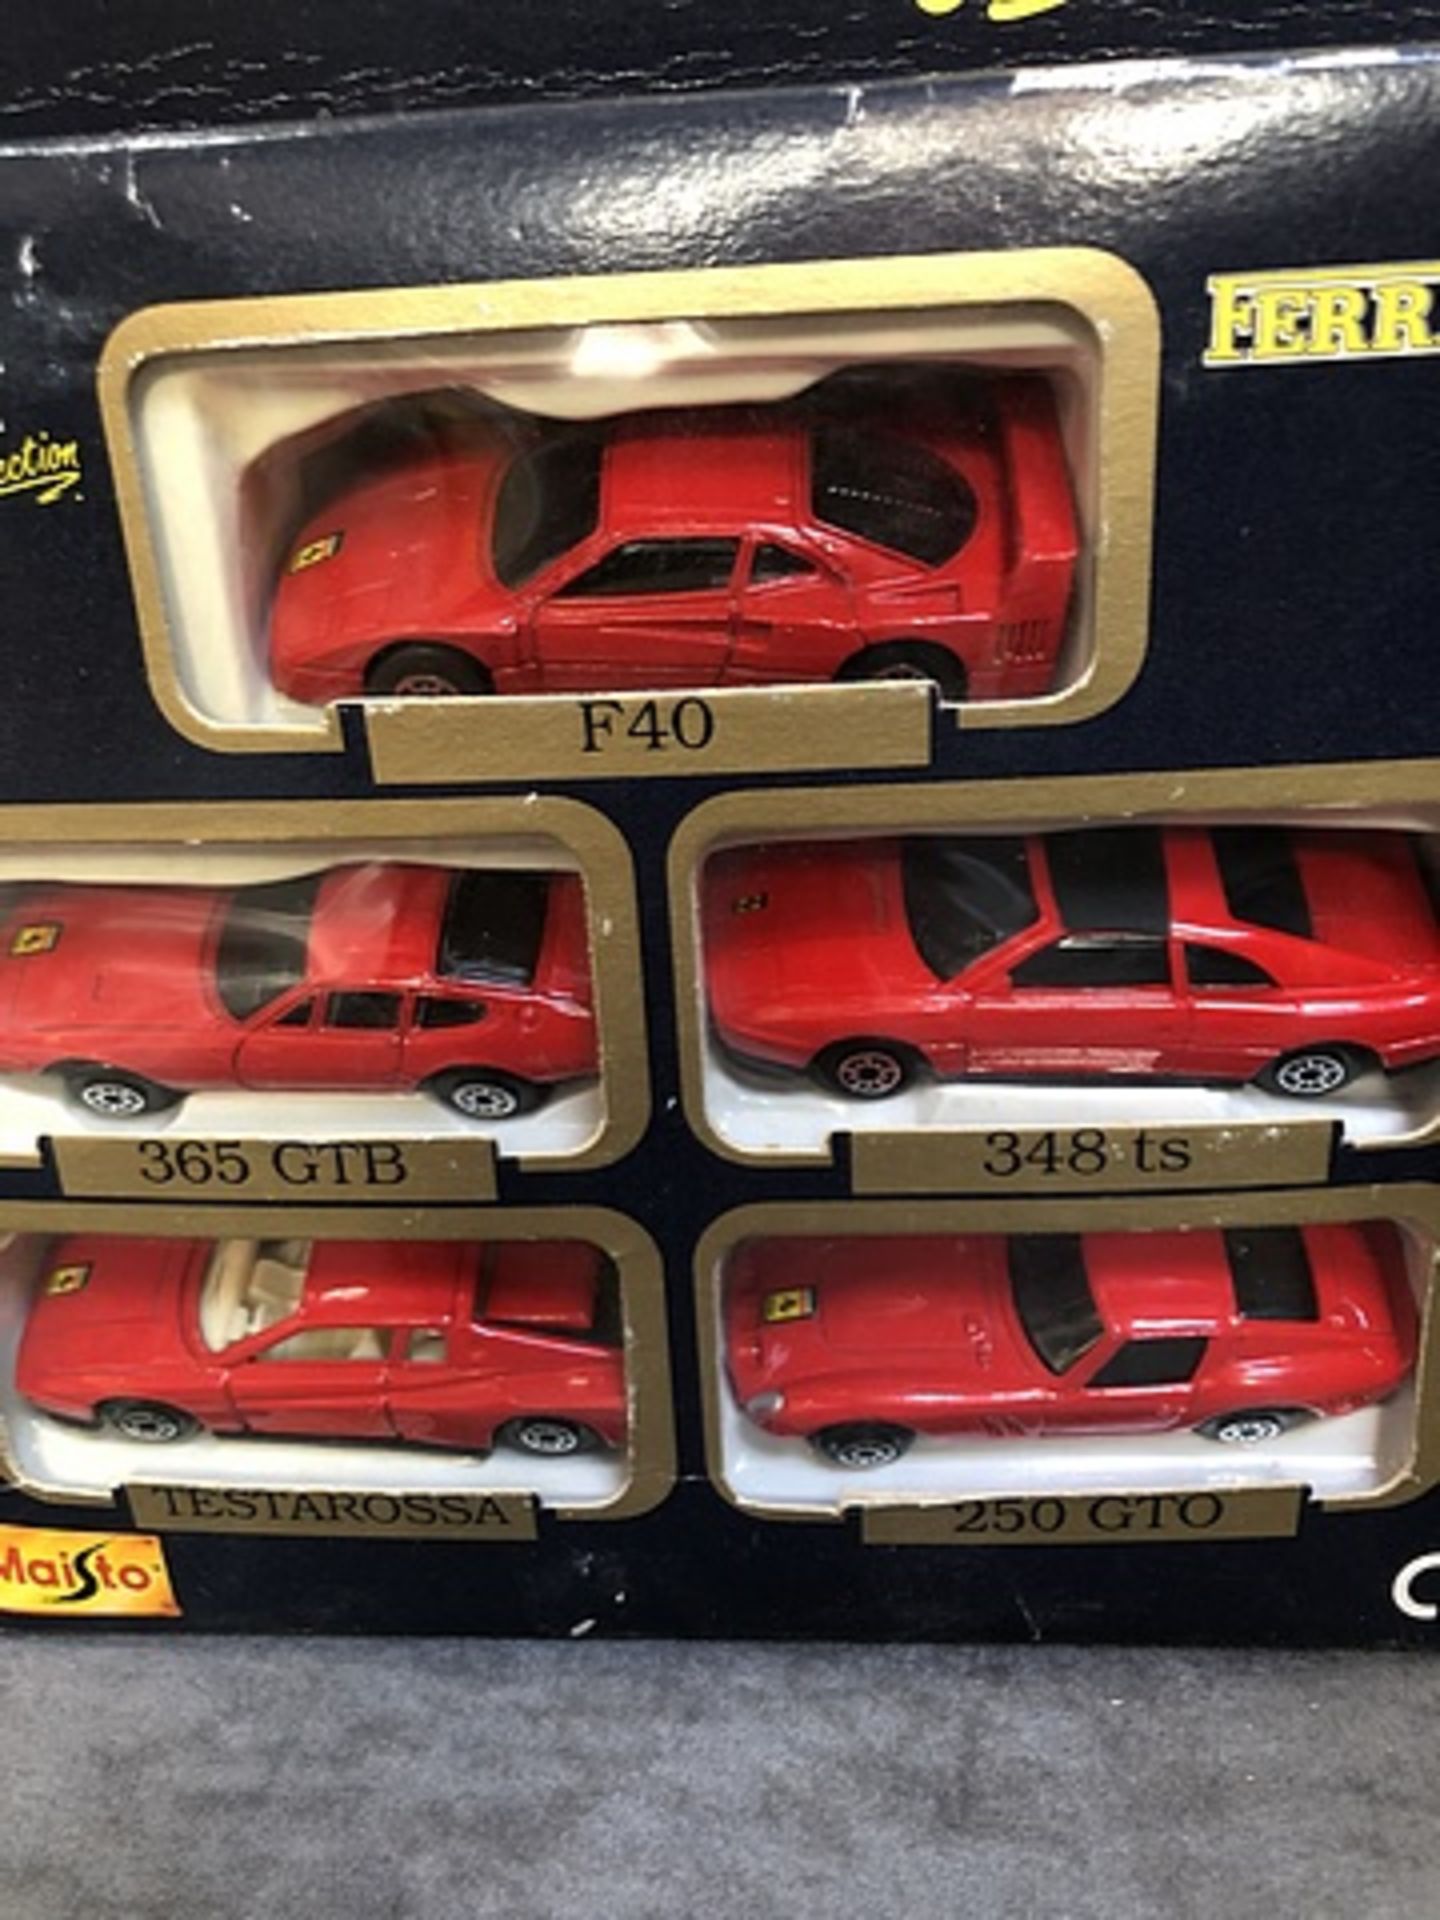 Maisto Hong Kong 1/64 Die-Cast Ferrari Box Set F-40 Testarossa 250 GTO 365 GTB 308 And 348TS - Image 2 of 2